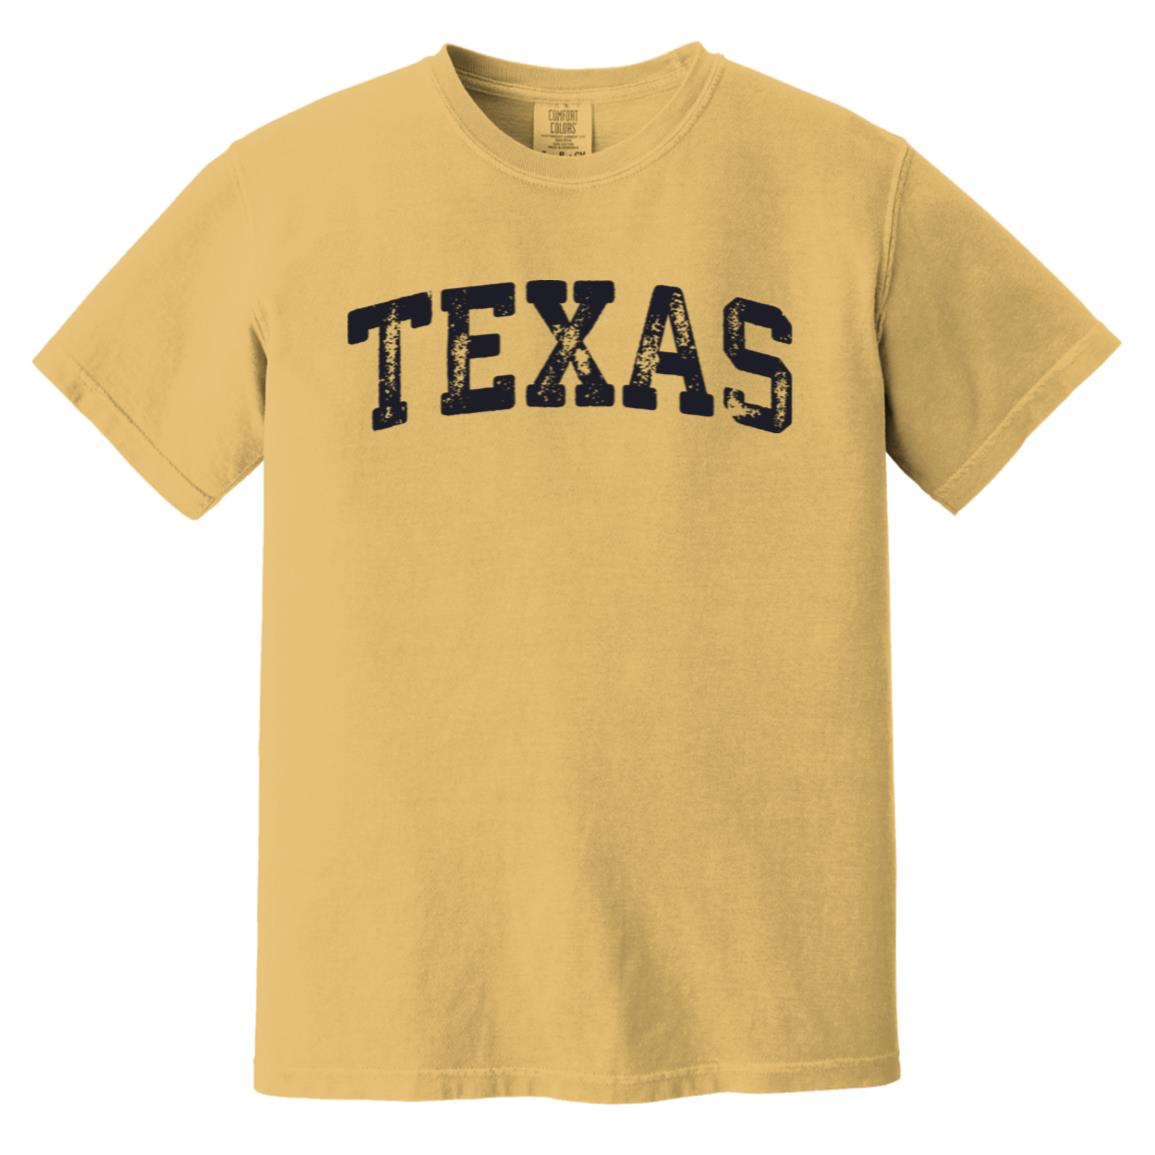 Vintage Comfort Colors Texas Shirt